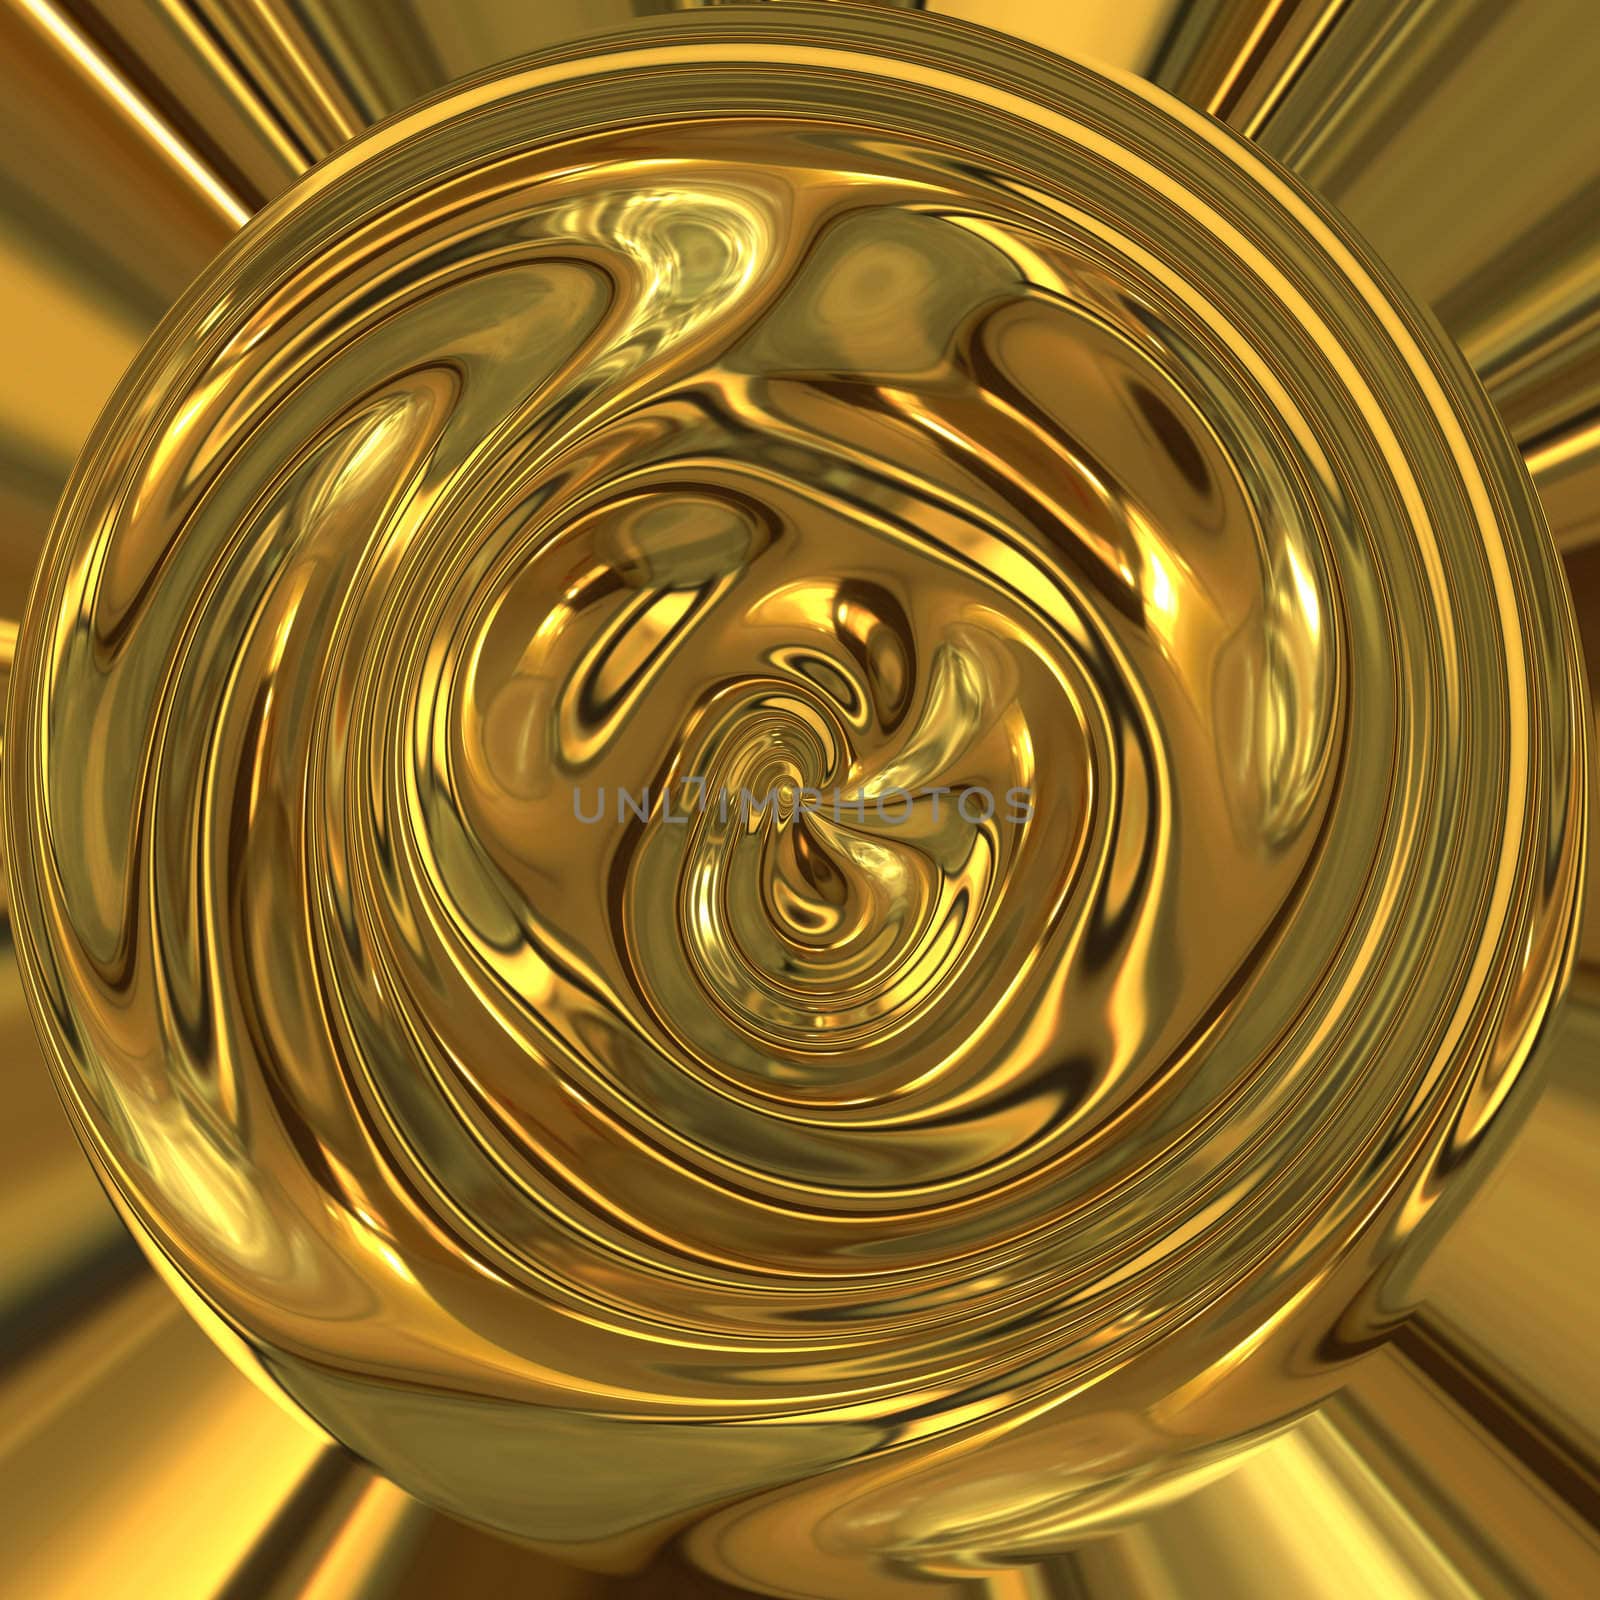 liquid gold swirls around in circle 